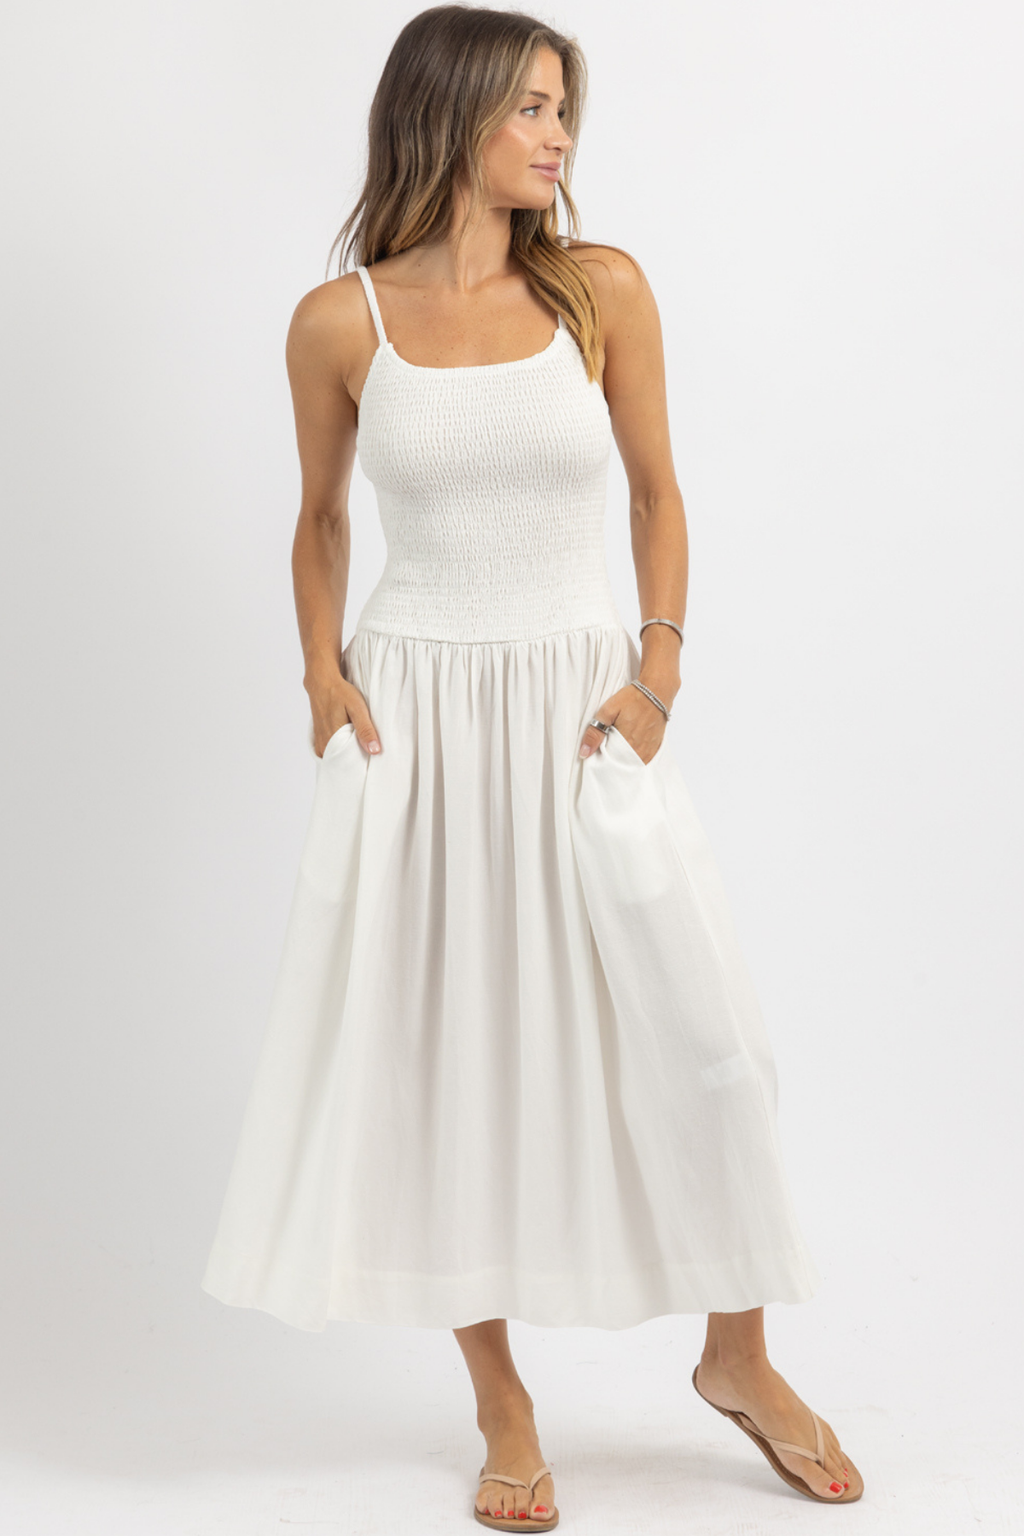 SOLEIL WHITE SMOCK DRESS